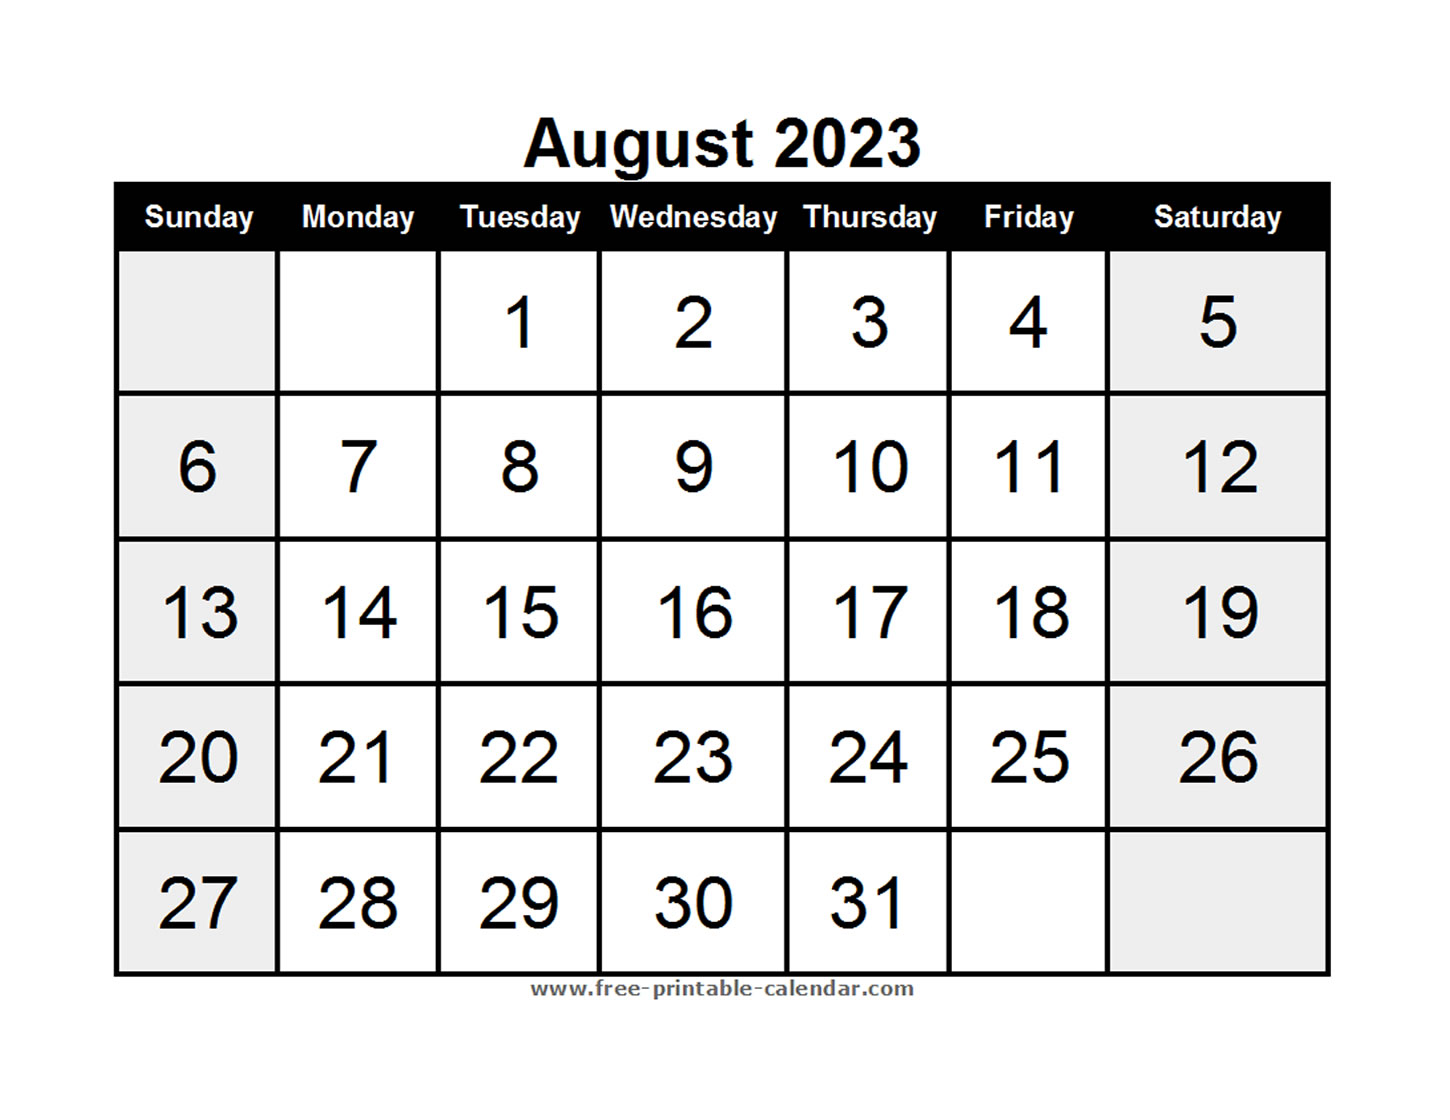 Free Printable Calendar August To December 2023